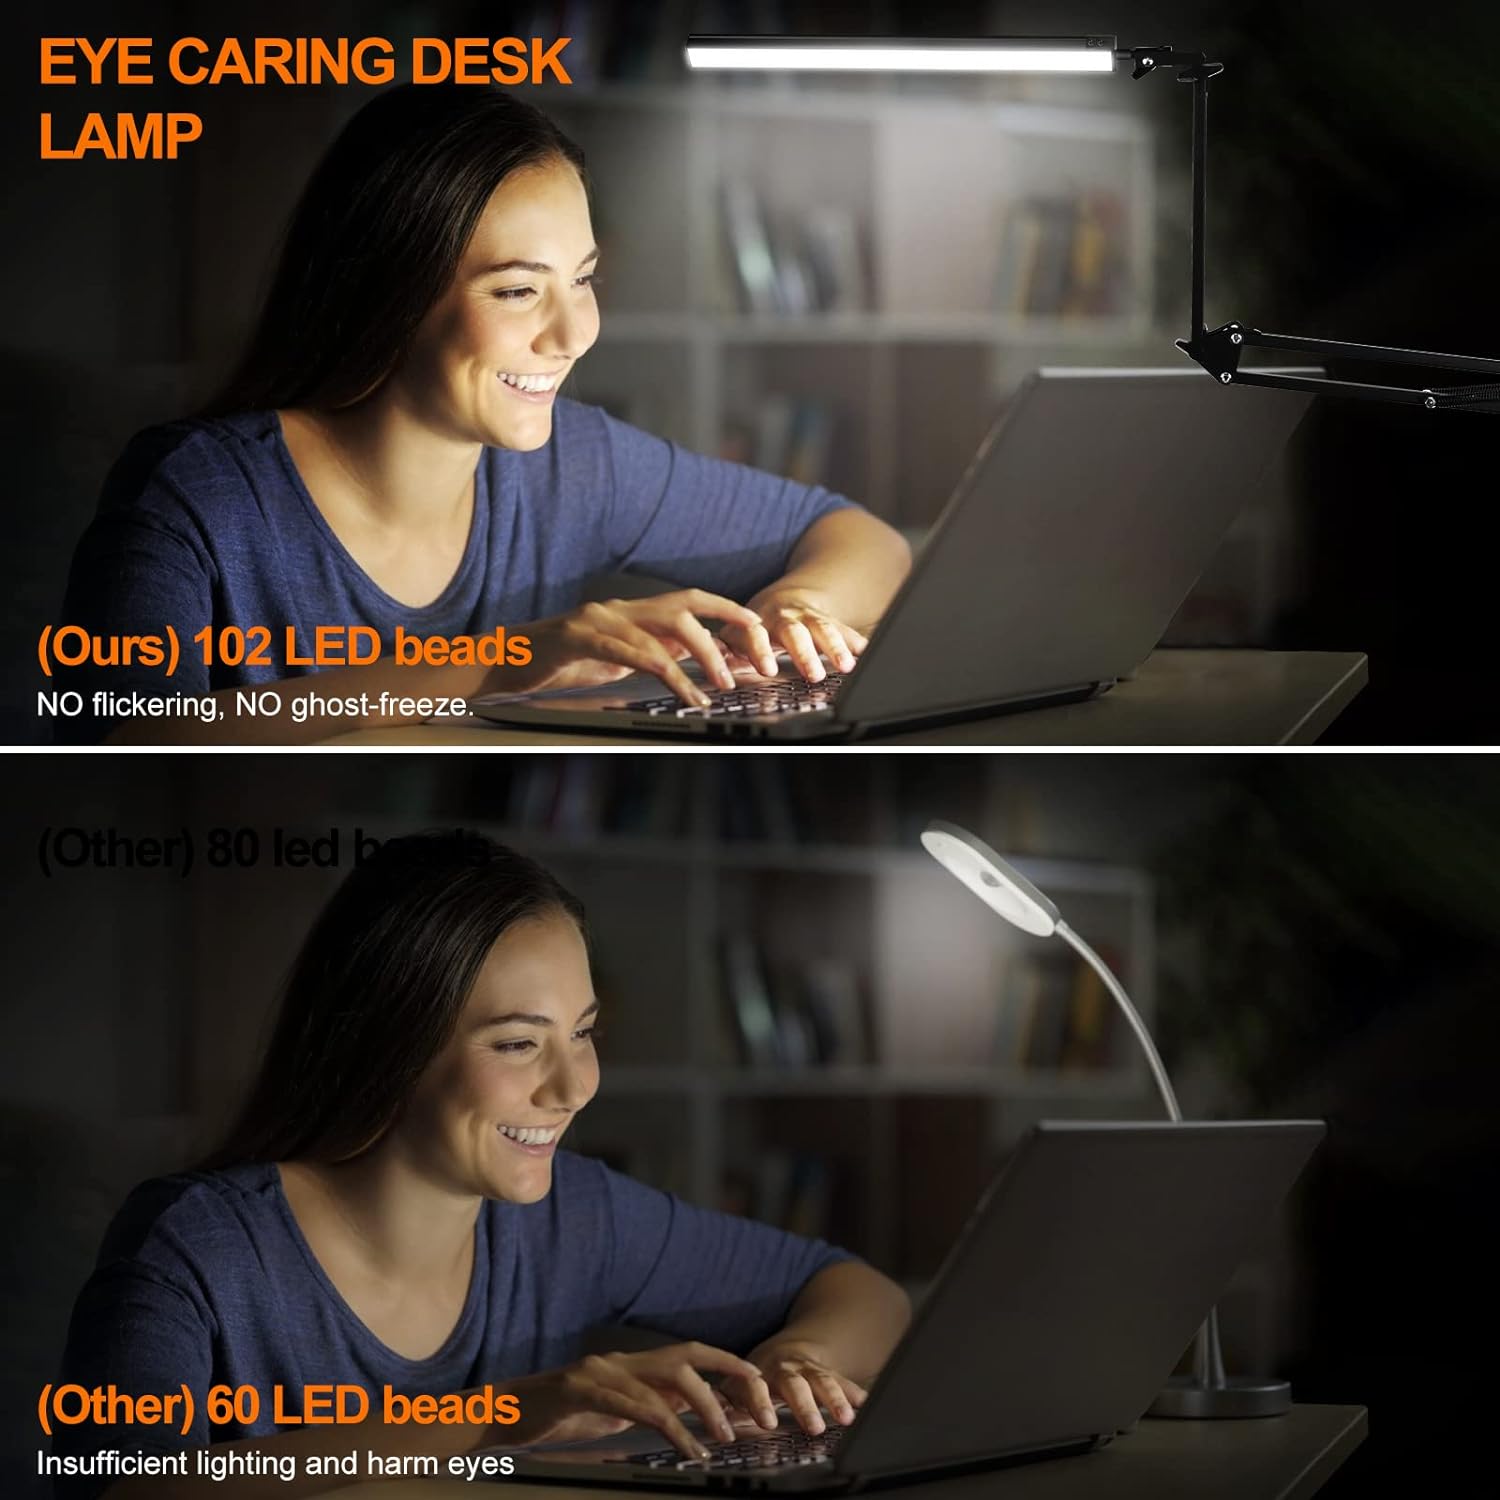 LED-Desk-Lights-Upgrade-18W-LED-Desk-Lamp-Longer-Swing-Arm-Table-Lamp-with-Clamp-Eye-Caring-Architect-Desk-Light-Dimmable-Lamp-with-3-Color-Modes-10-Brightness-Levels-12